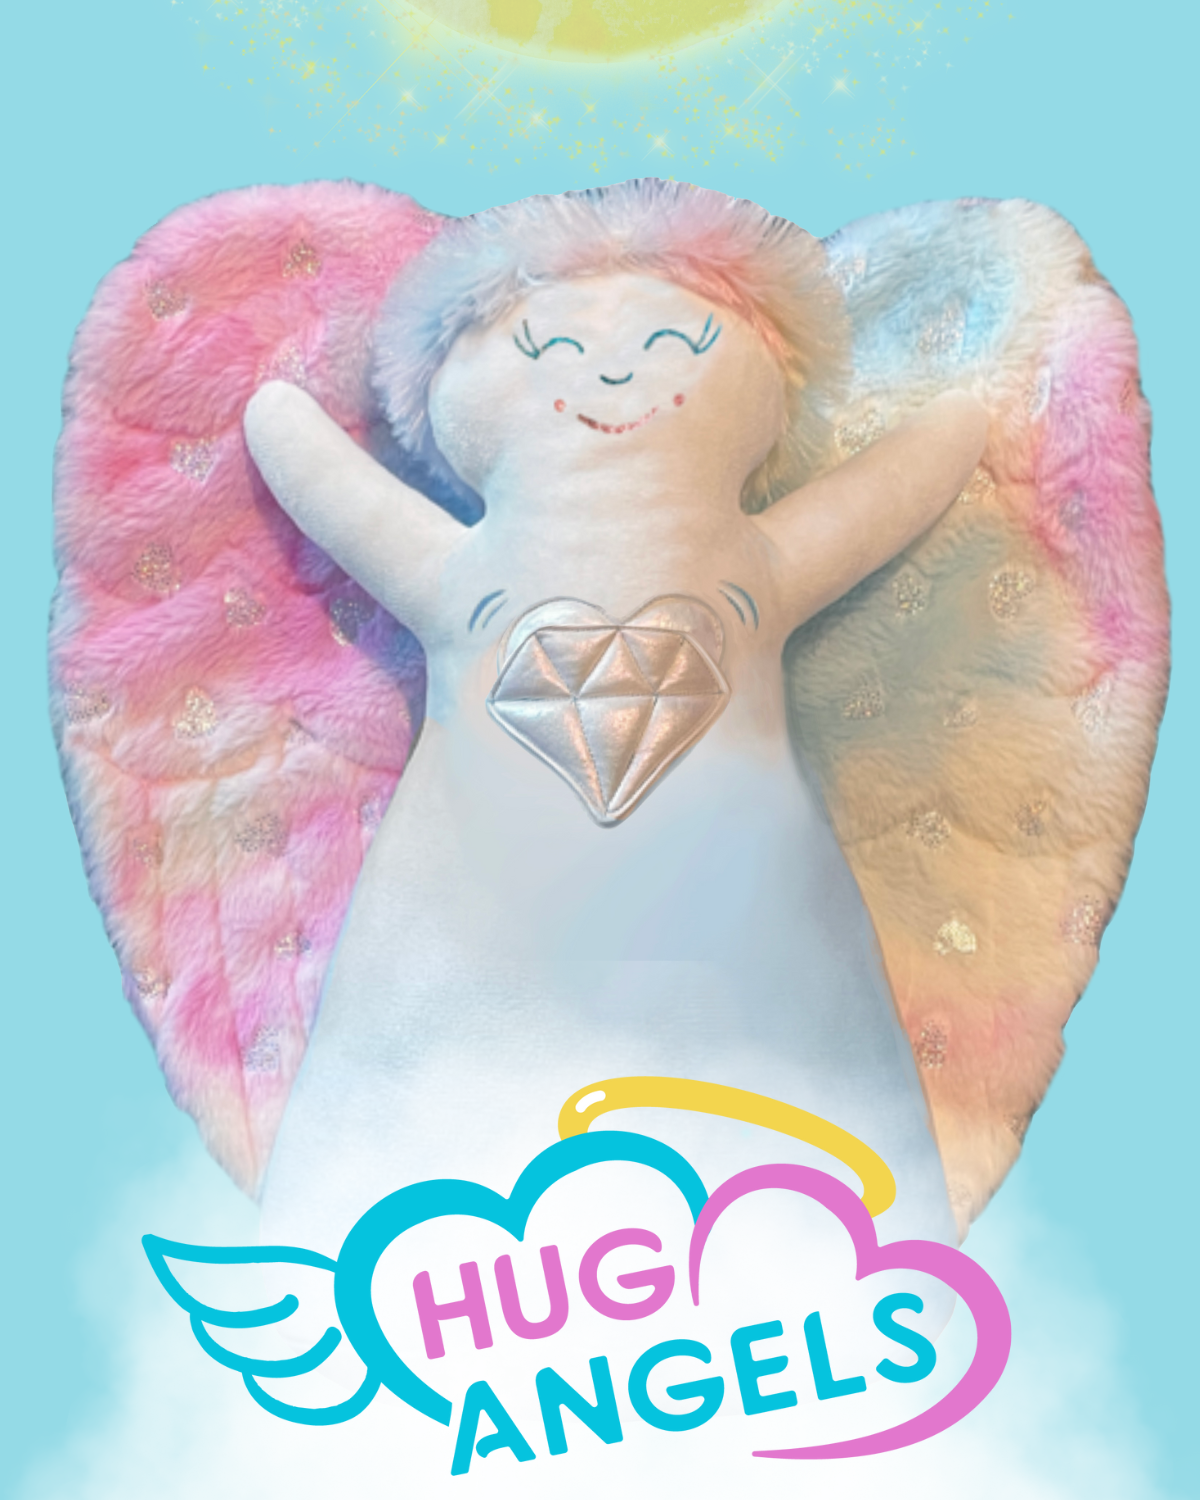 HUG ANGEL PLUSH DOLL w/ HALO Bag